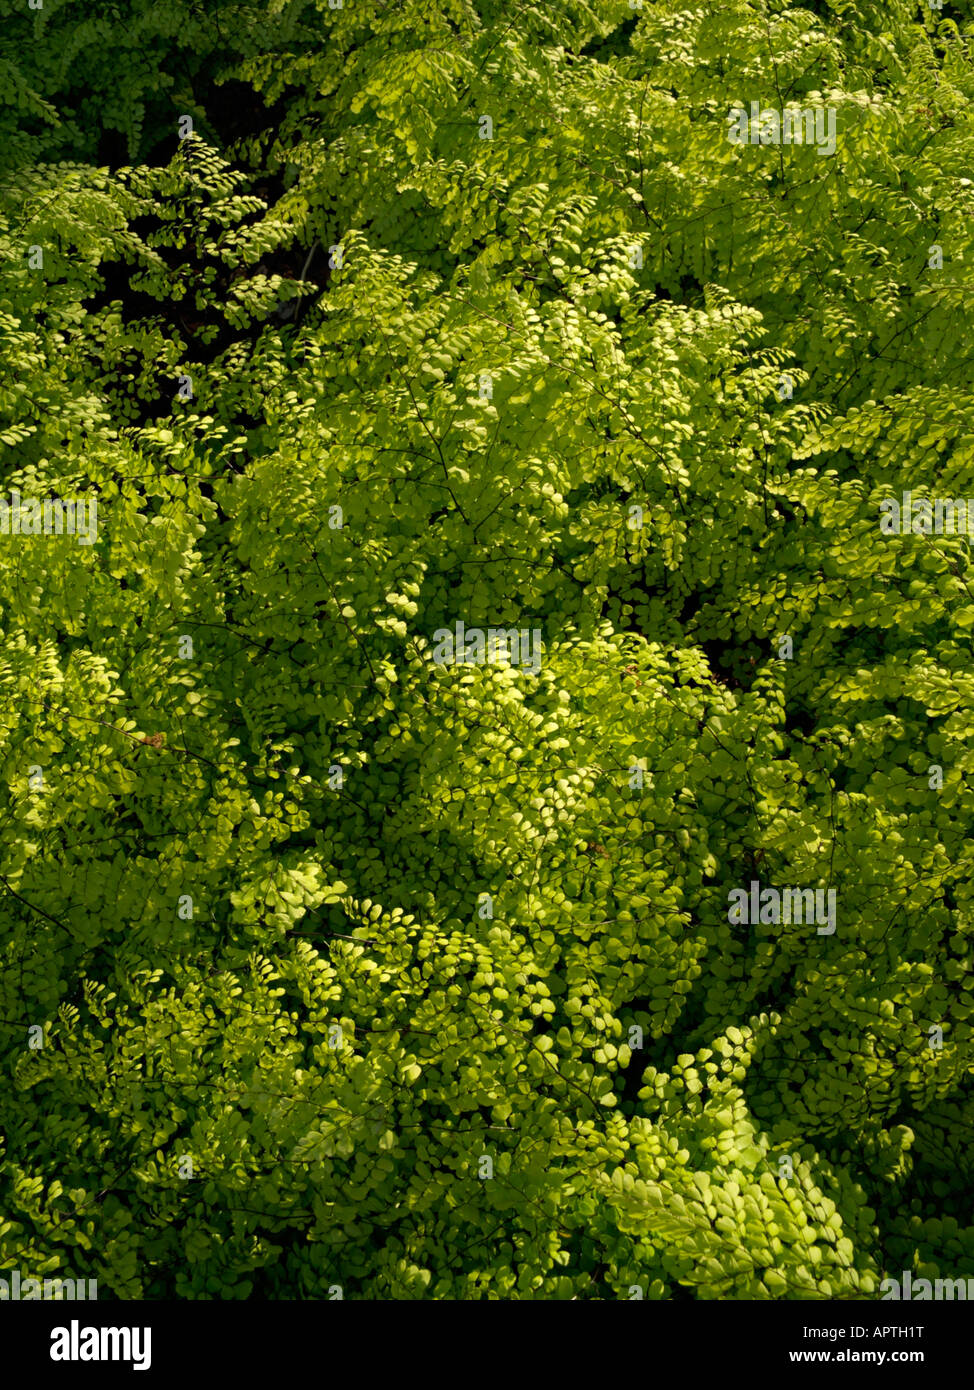 Evergreen maidenhair fern (Adiantum venustum) Stock Photo